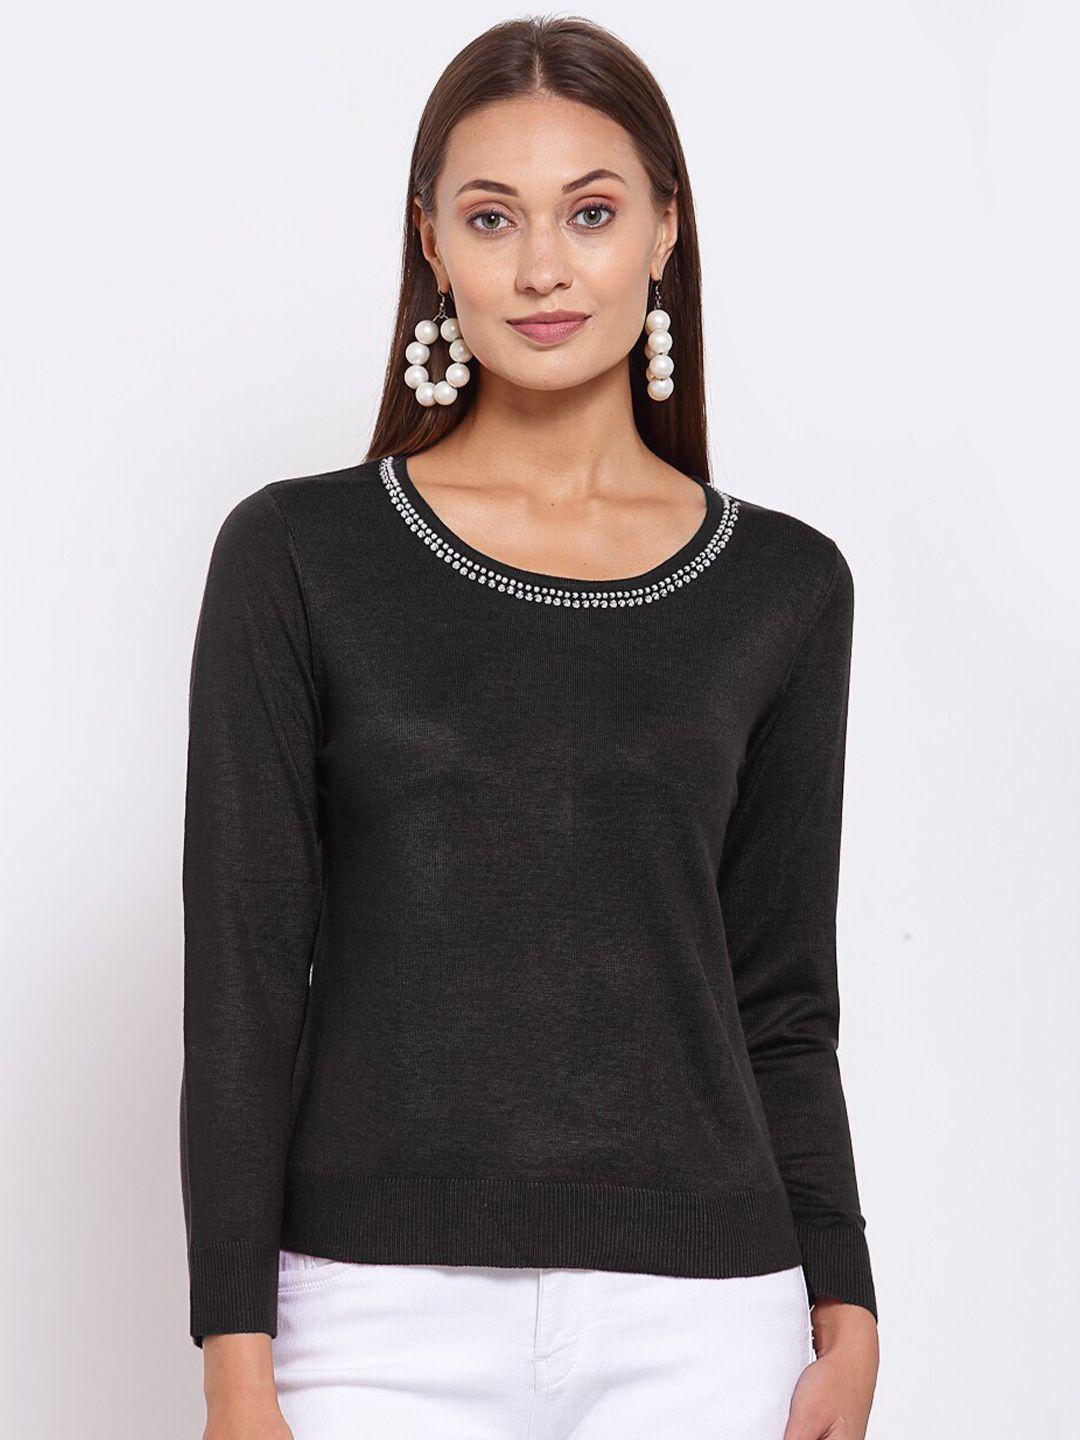 klotthe-women-black-&-white-pullover-with-embellished-detail